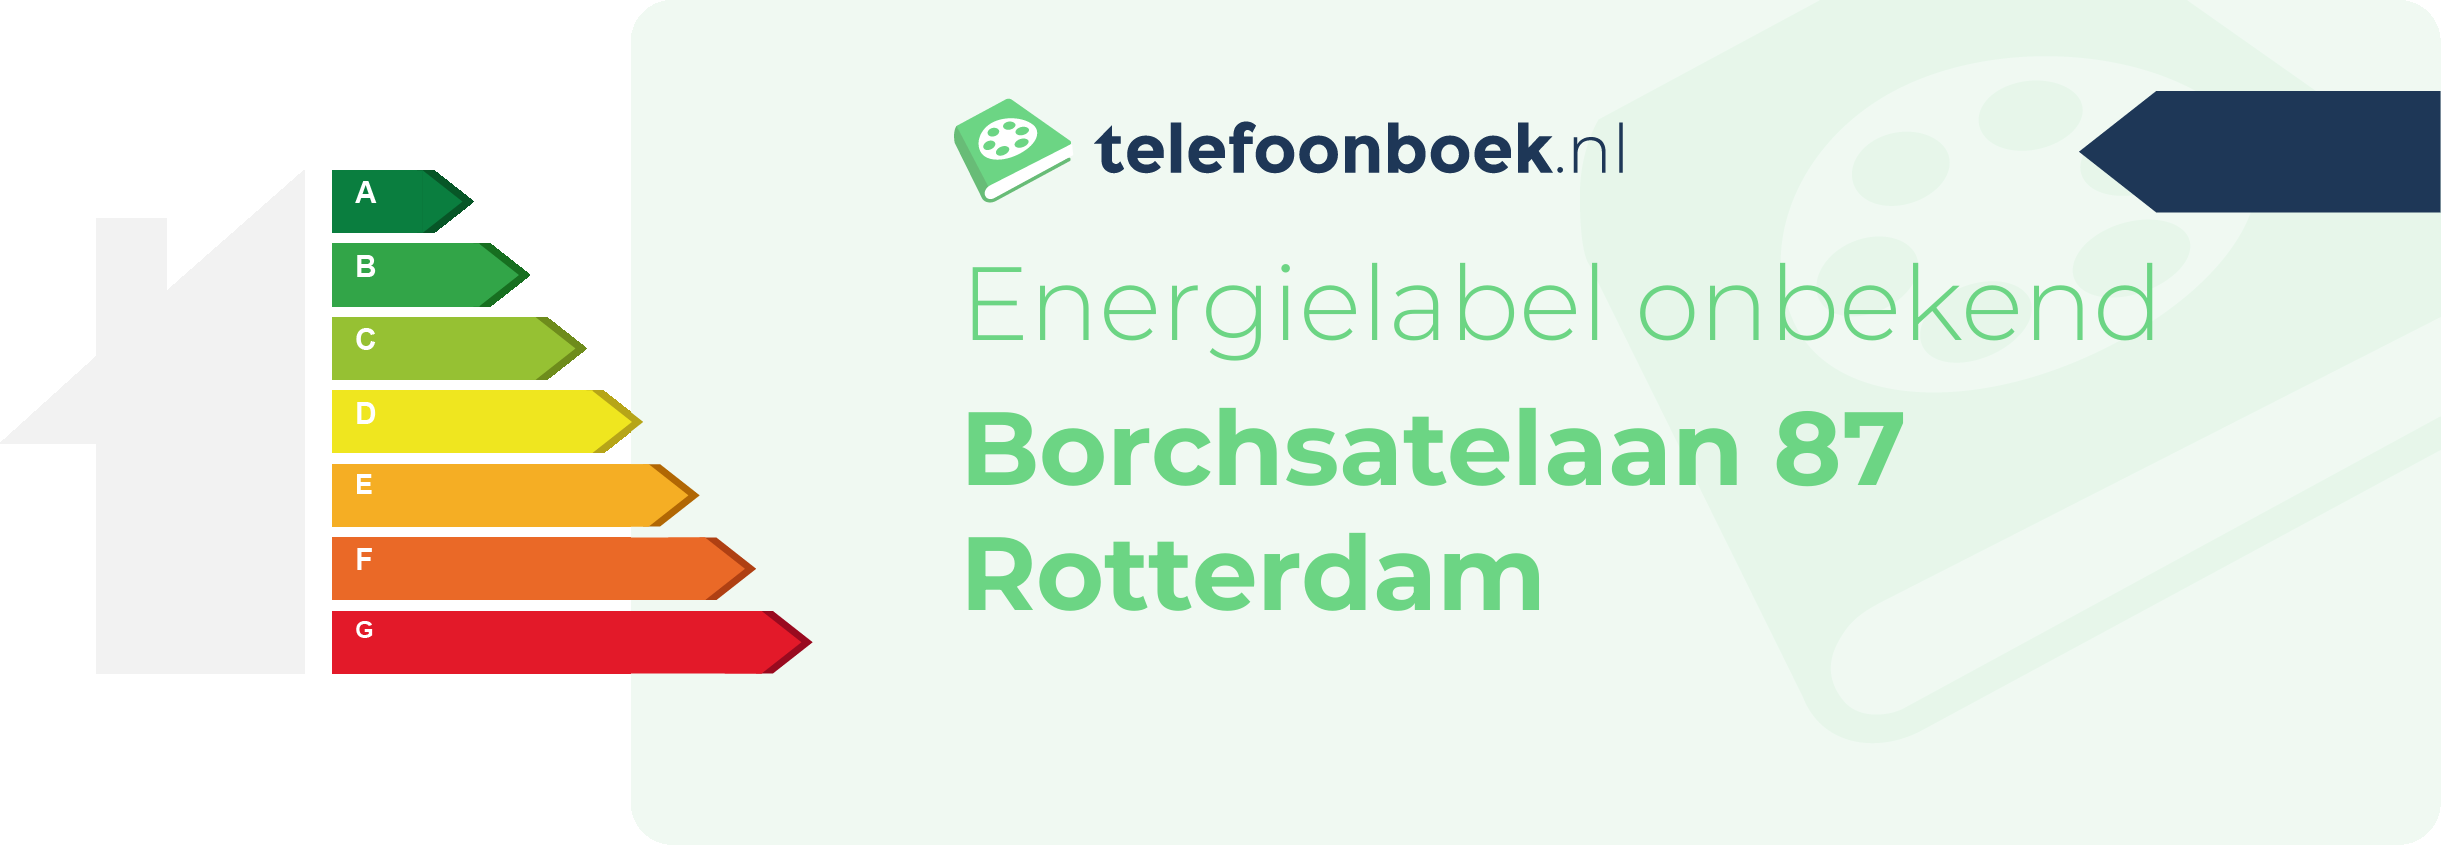 Energielabel Borchsatelaan 87 Rotterdam